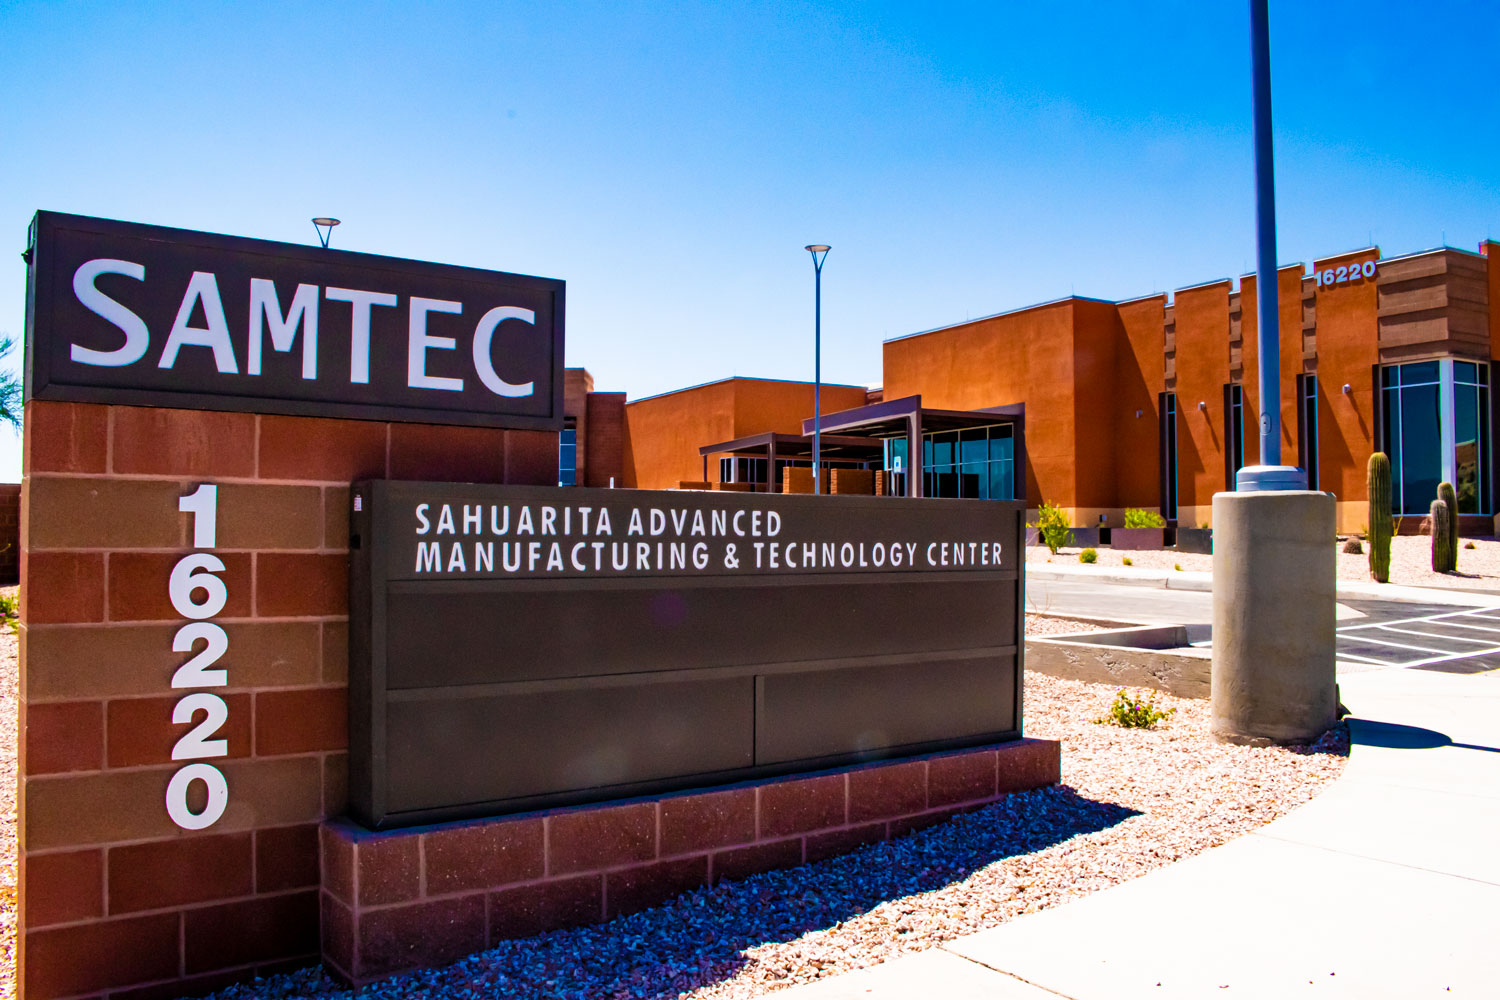 PowerPhotonic draws on Arizona’s advanced optics and engineering heritage to enable its rapid US expansion.